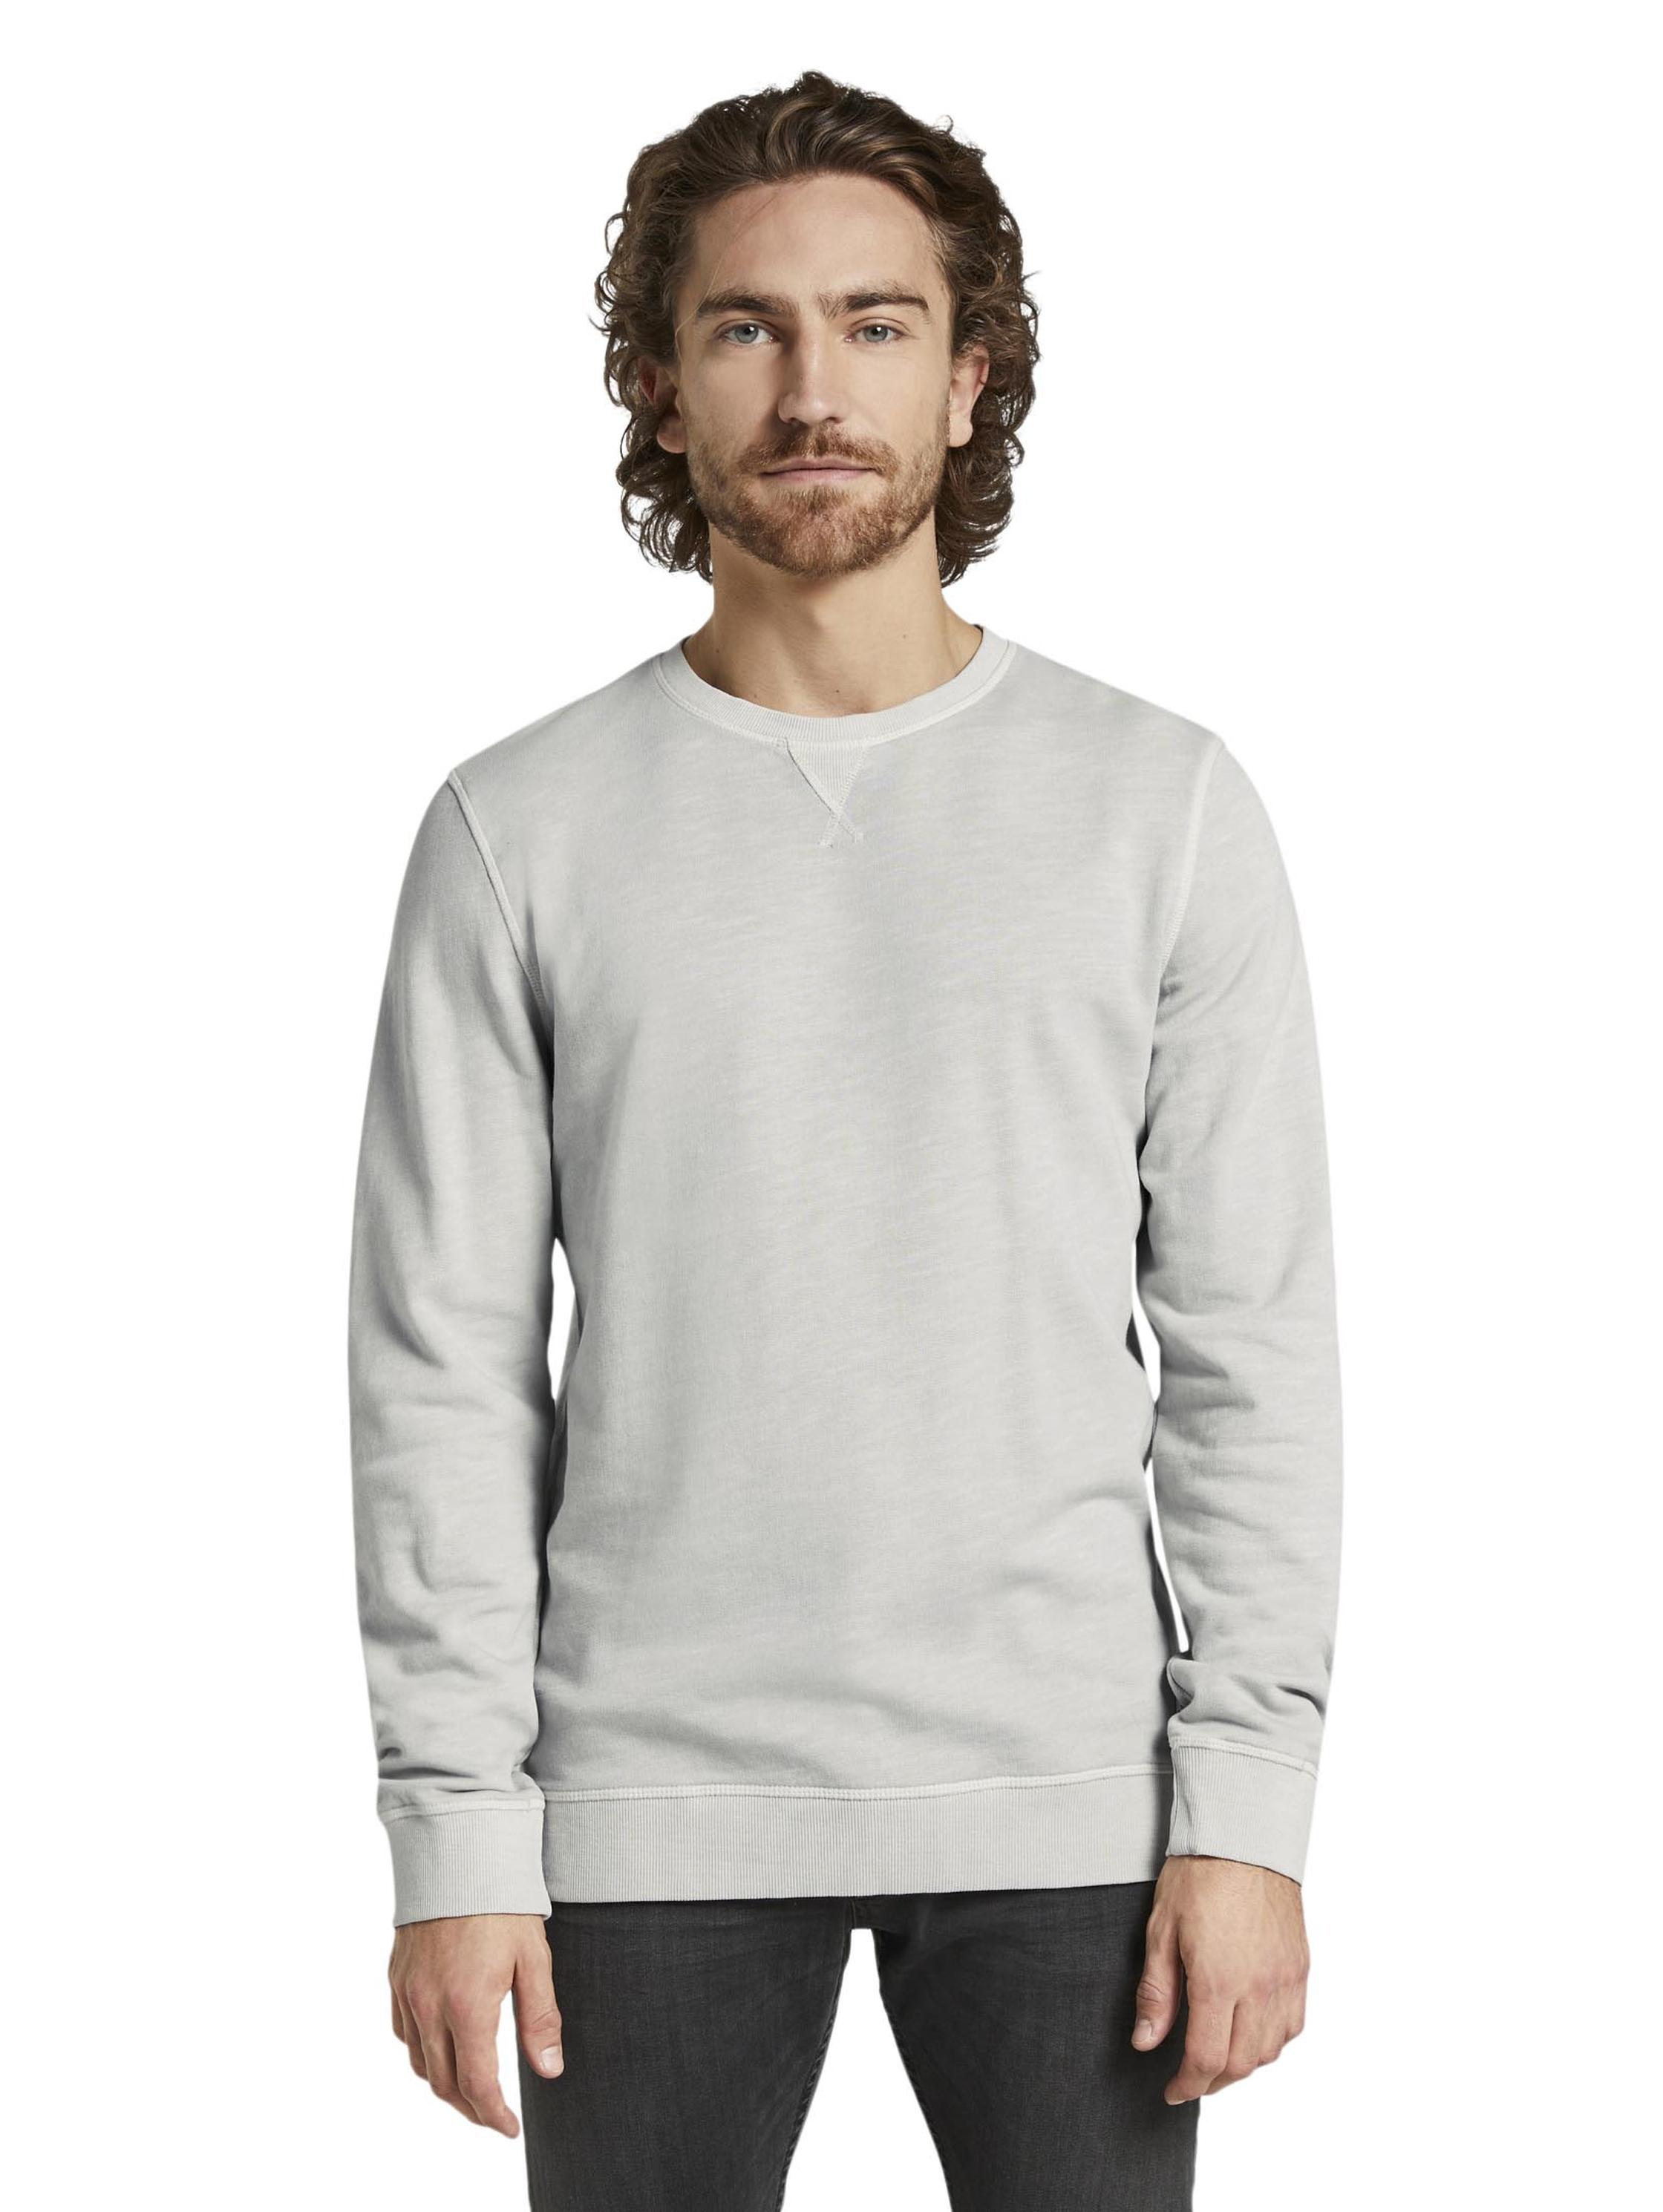 overdyed basic sweatshirt, Silver Grey                   Grey,